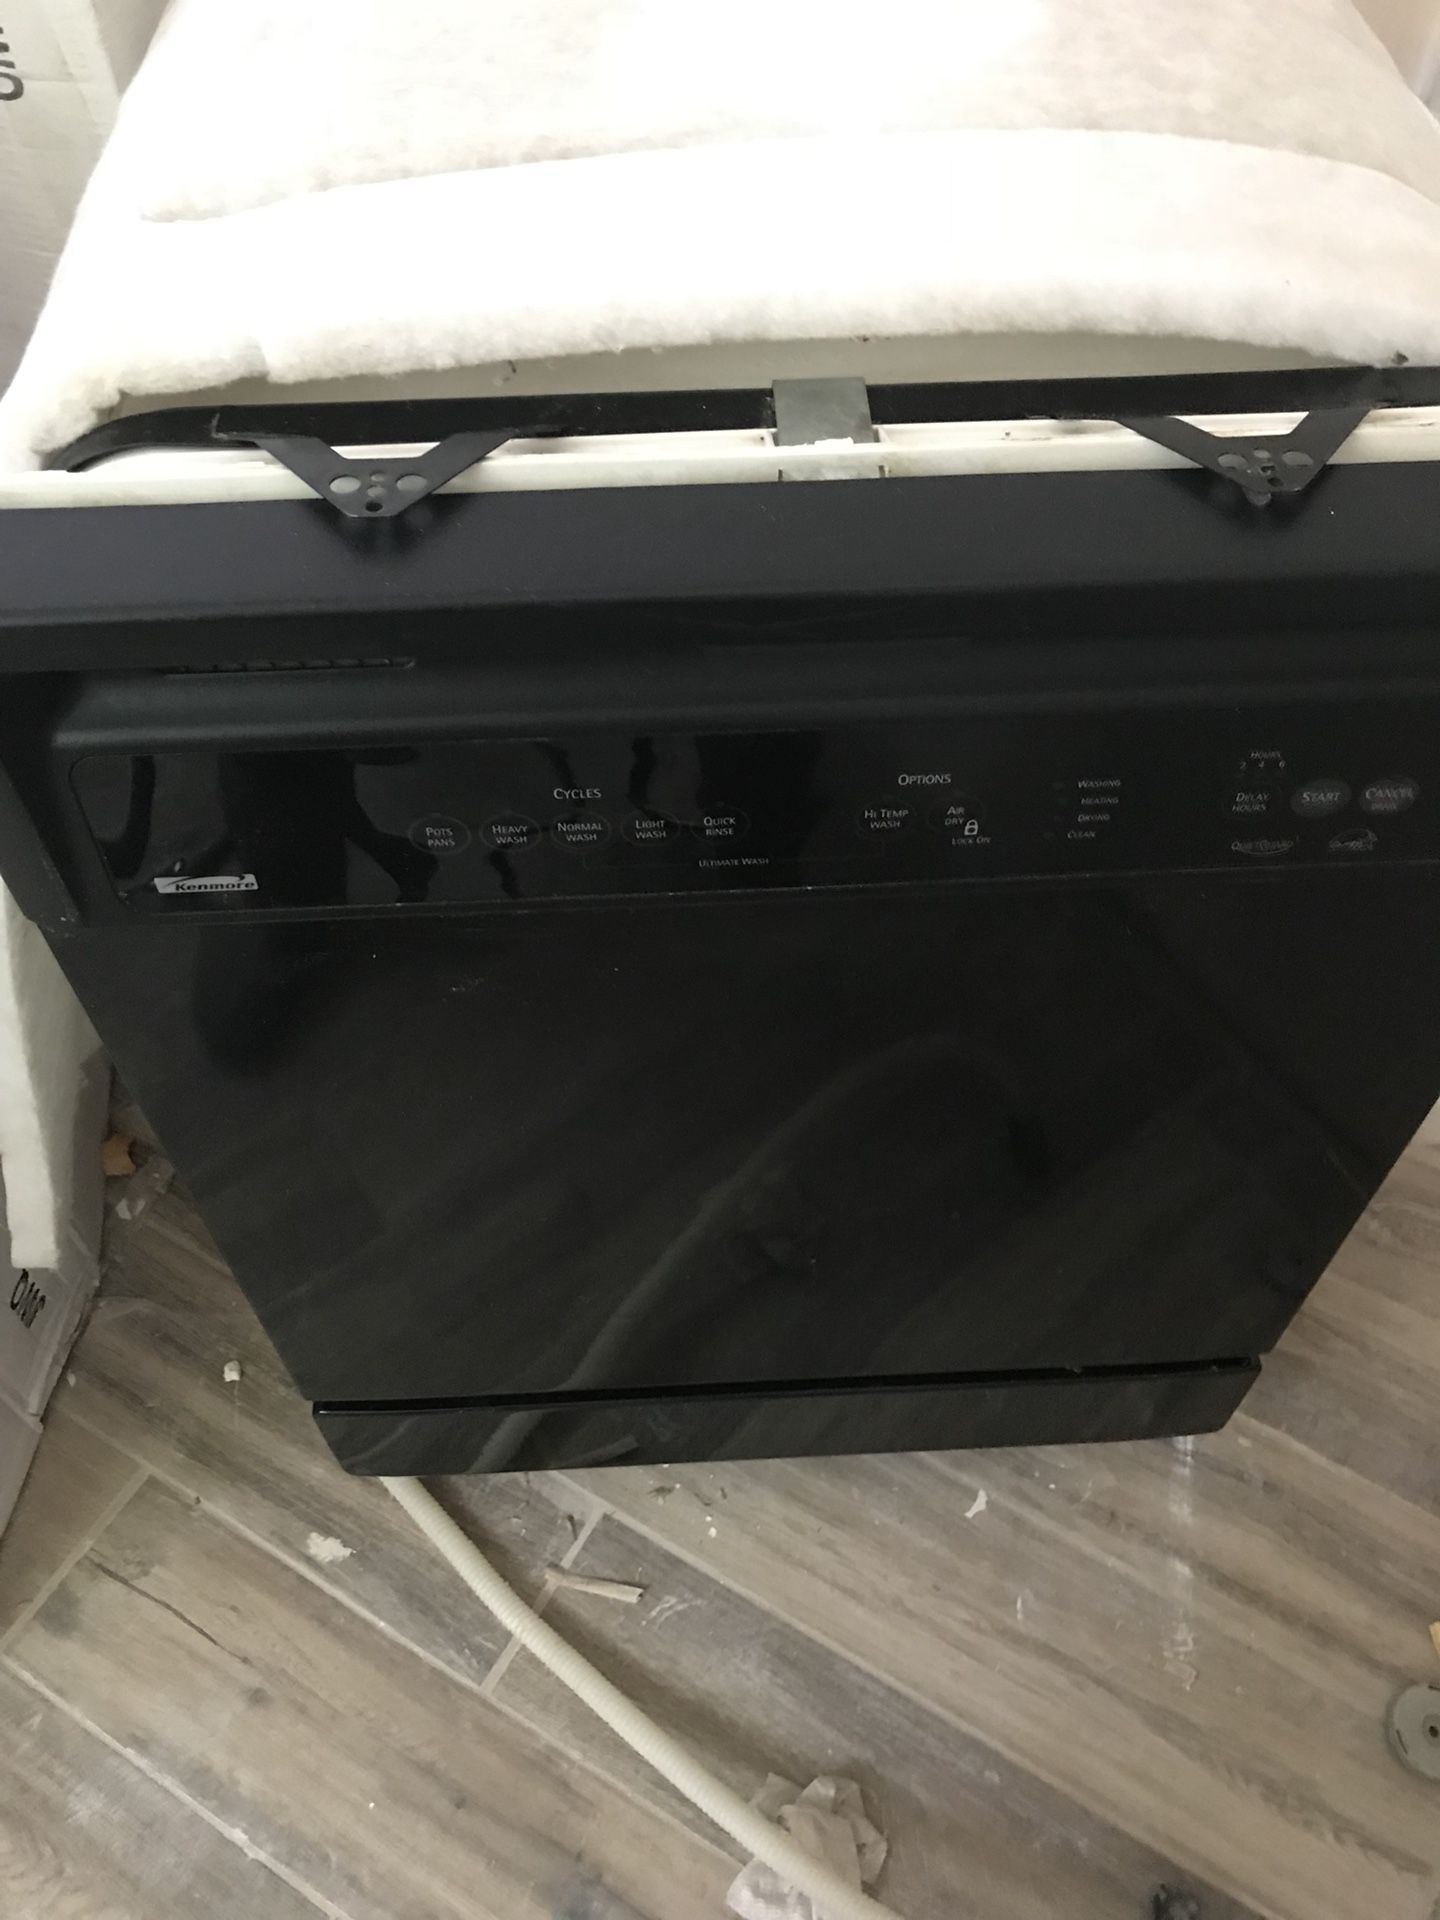 Kenmore 24" Built-In Dishwasher w/ PowerWave Spray Arm - Black color